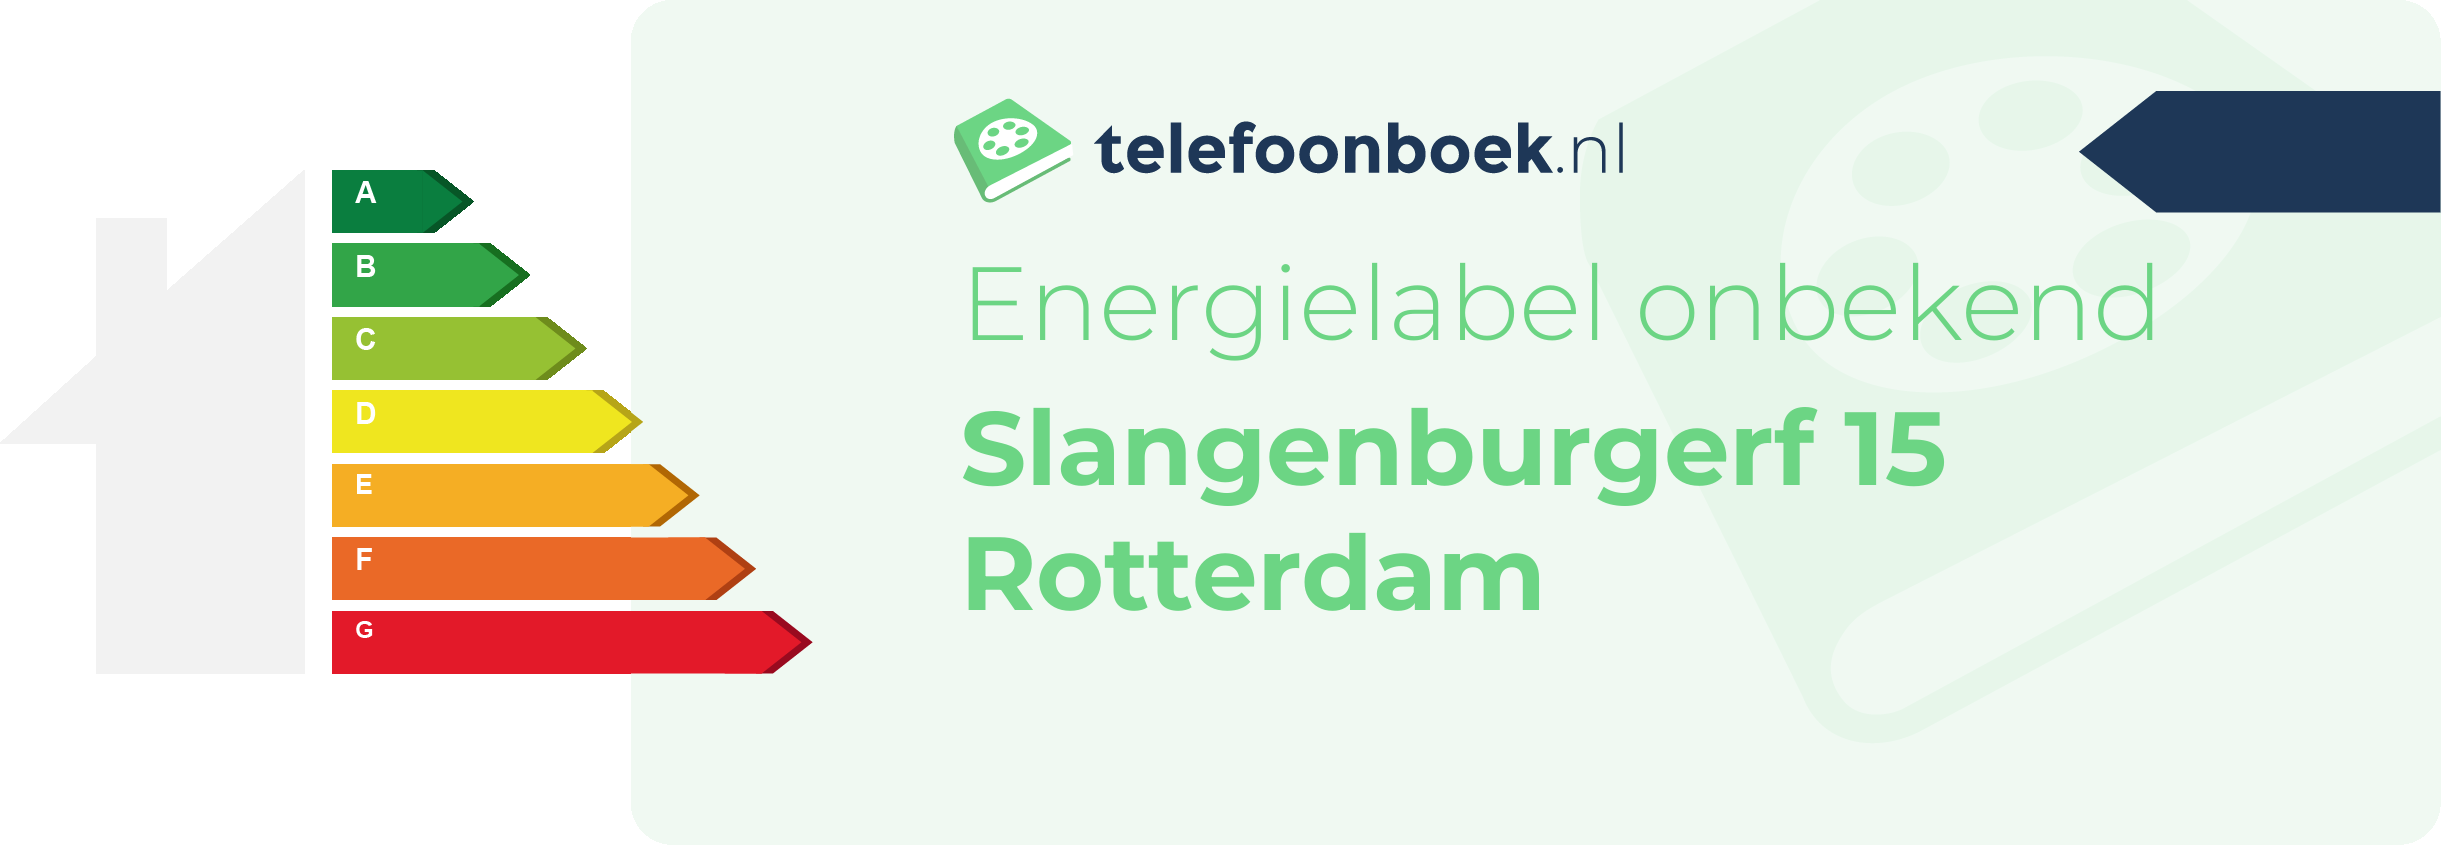 Energielabel Slangenburgerf 15 Rotterdam